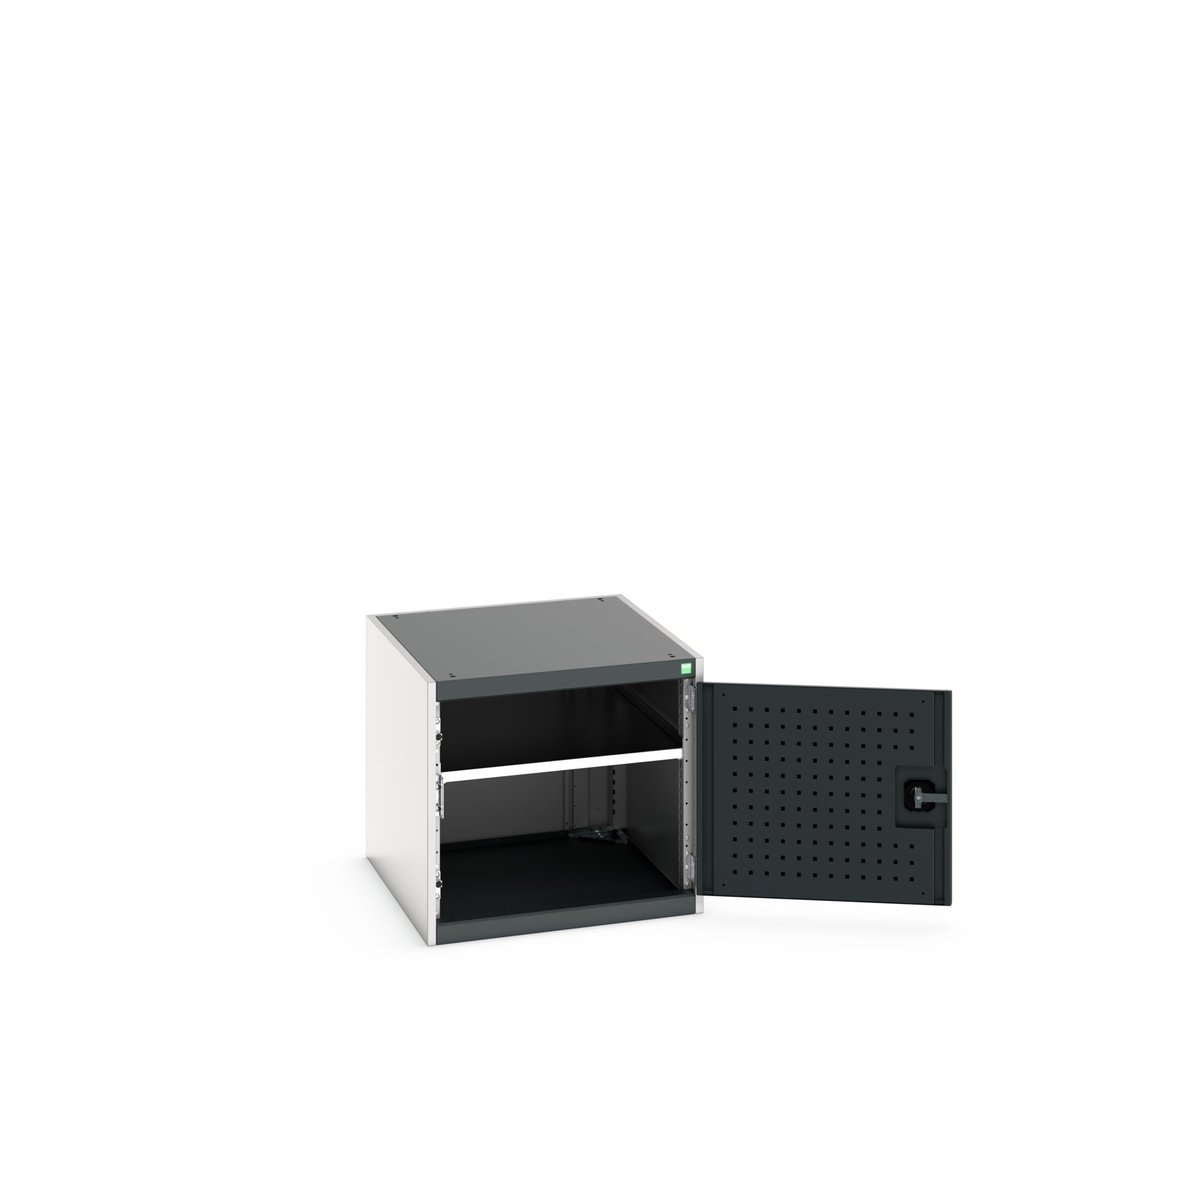 40027098. - cubio drawer cabinet 